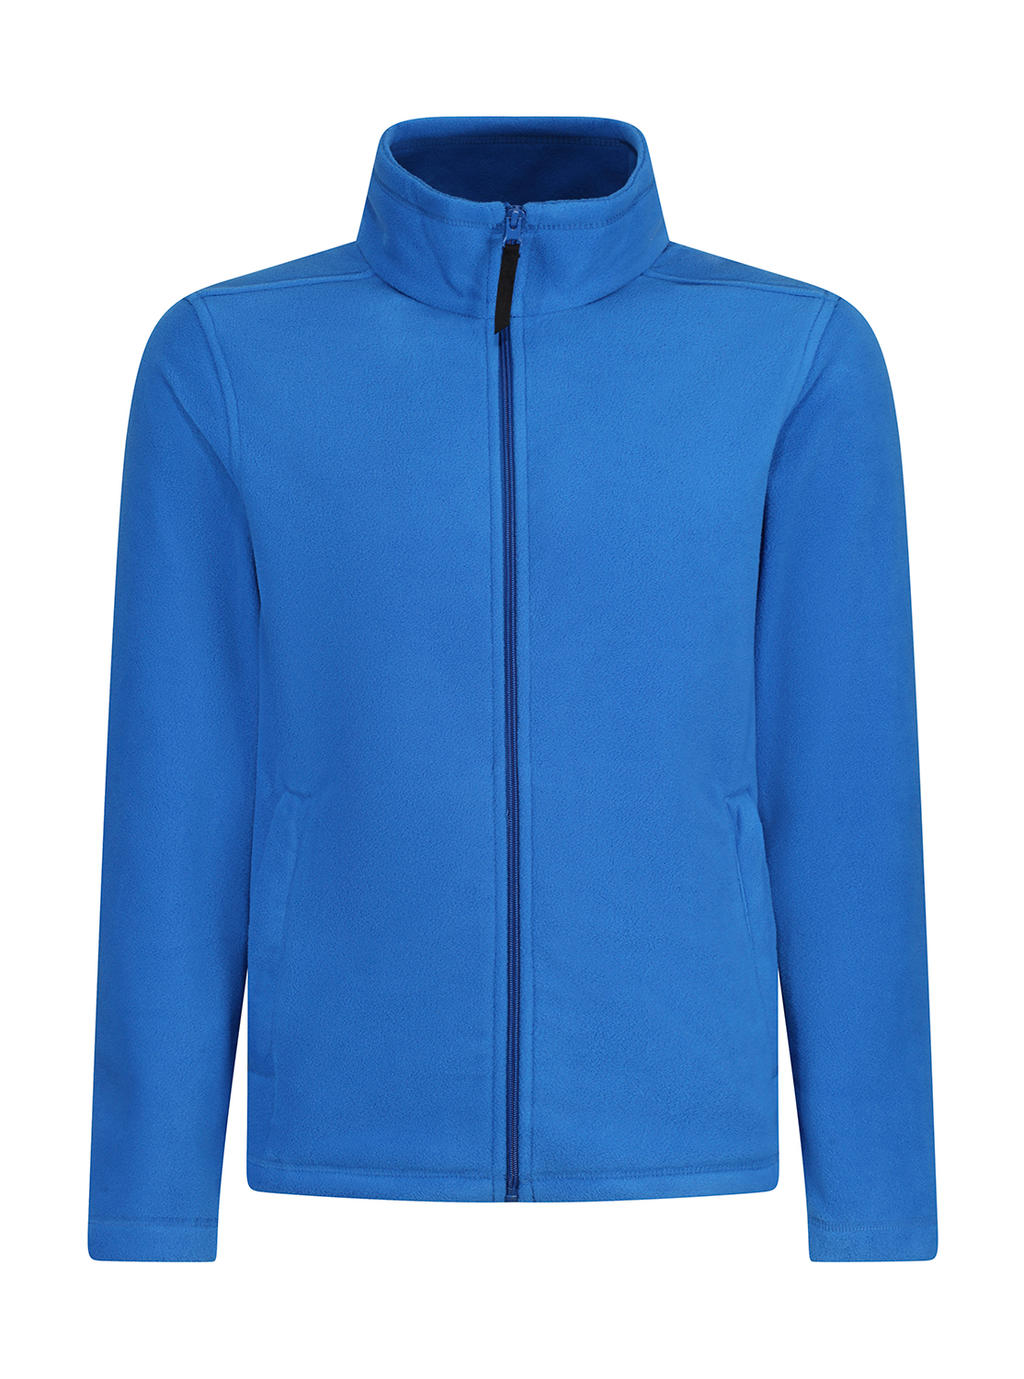  Micro Full Zip Fleece in Farbe Oxford Blue